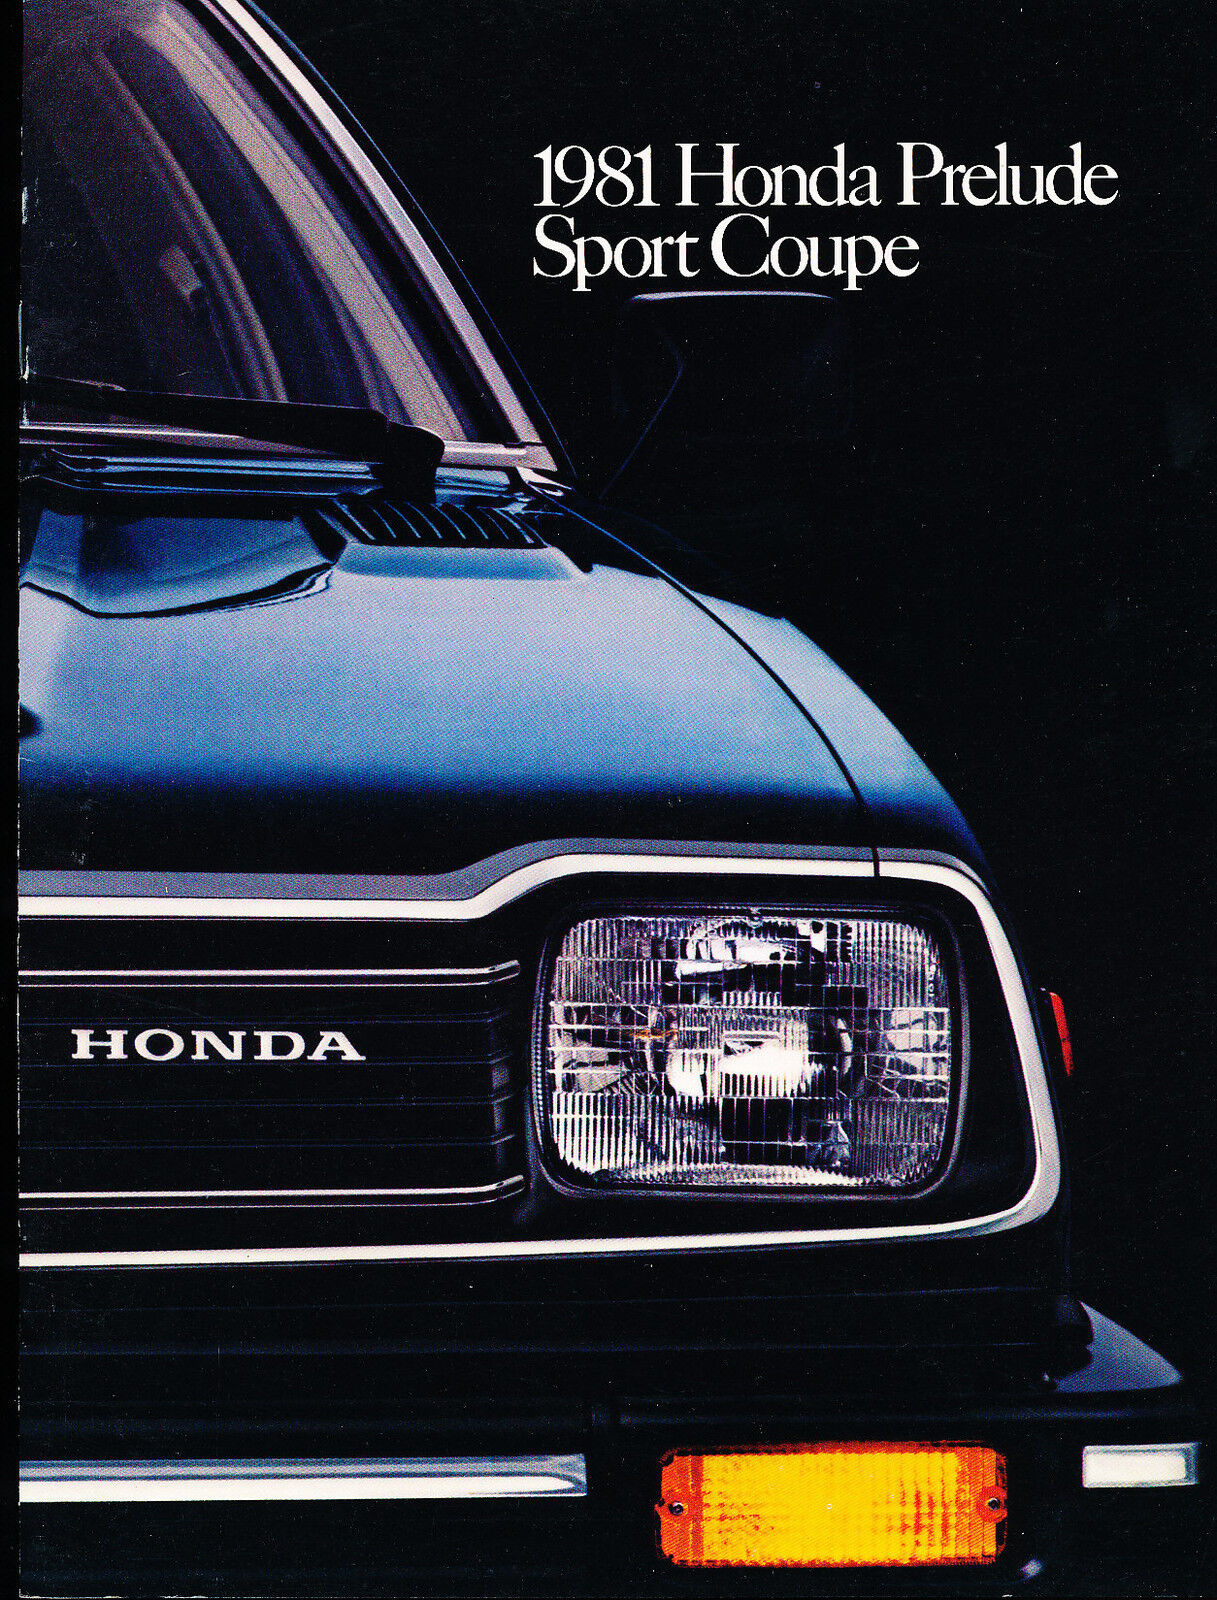 1981 Honda Prelude Sport Coupe 16-page Original Car Sales Brochure Catalog